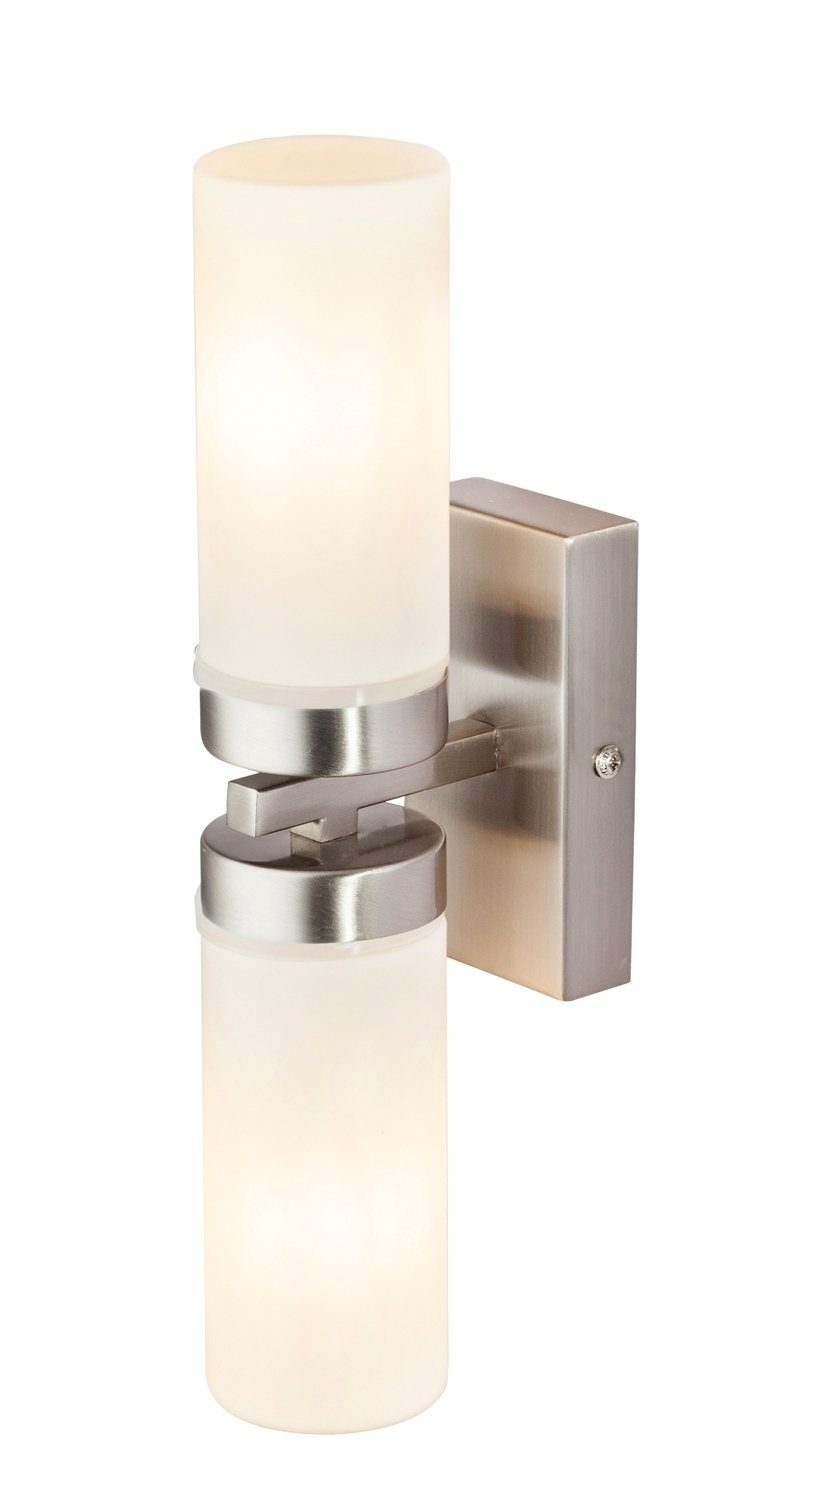 cm, KADIN, Globo Metall, H Opalglas ohne Lampenschirm Nickelfarben, Weiß, 30 Wandleuchte Leuchtmittel, 2-flammig, aus